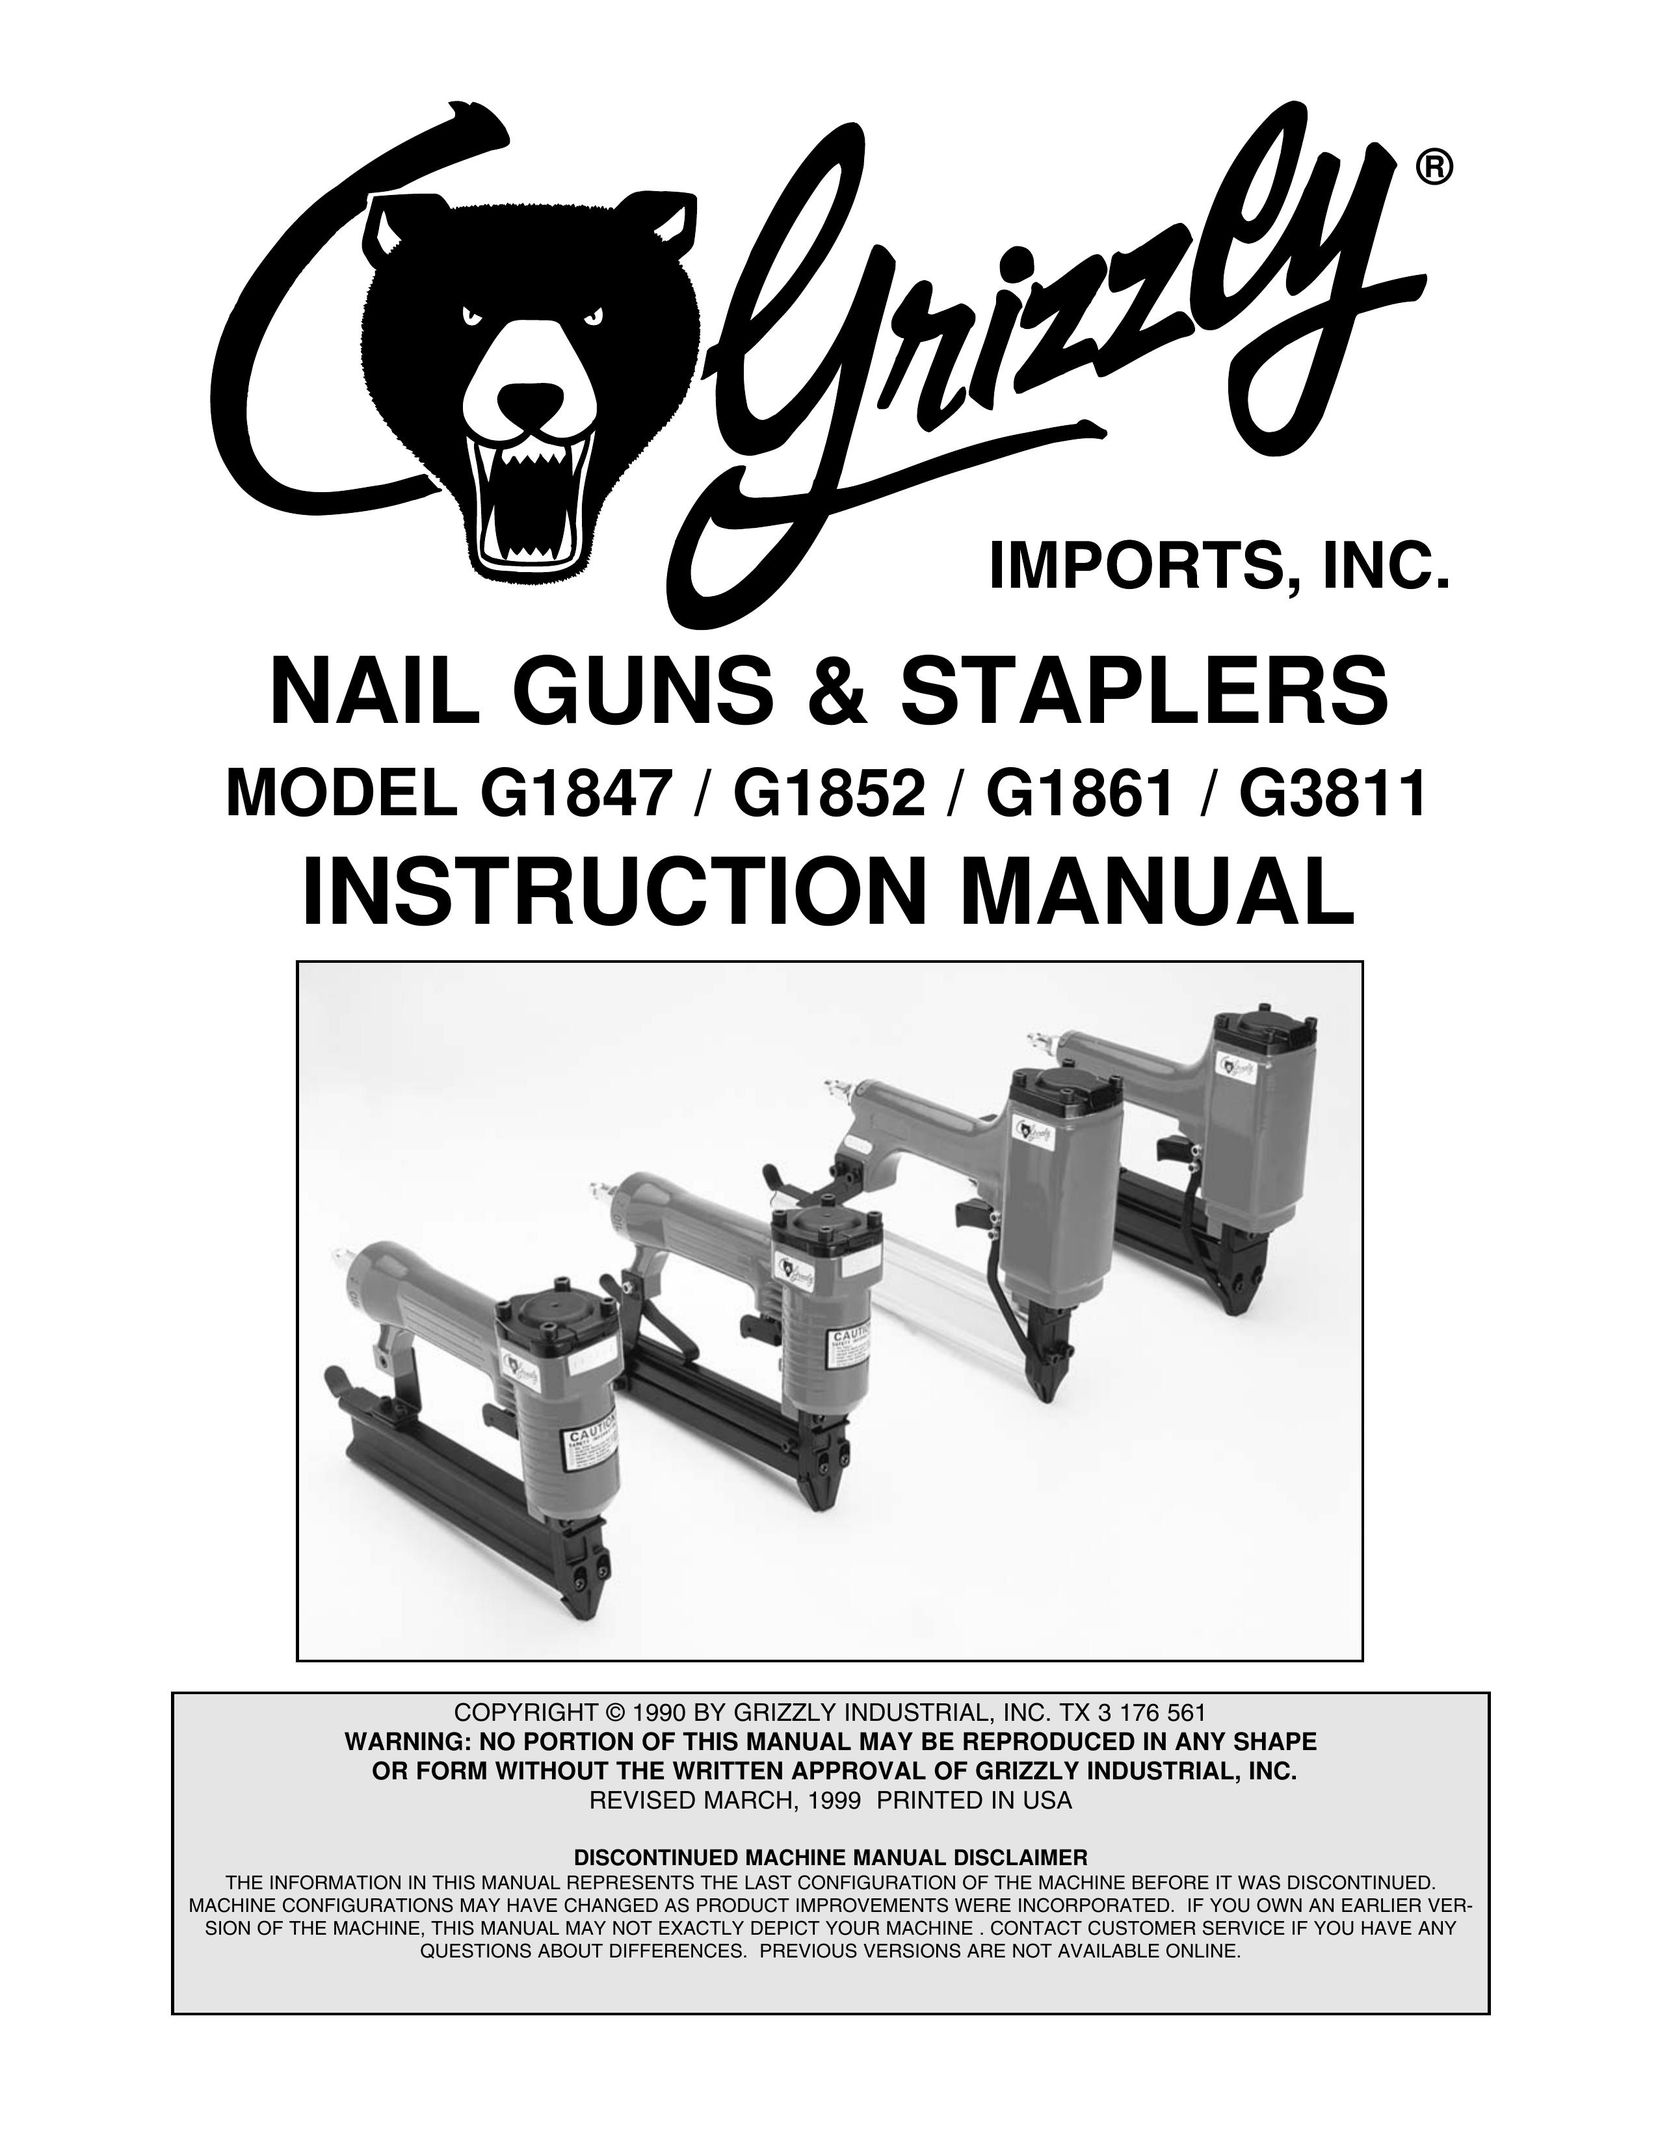 Grizzly G1847 Nail Gun User Manual